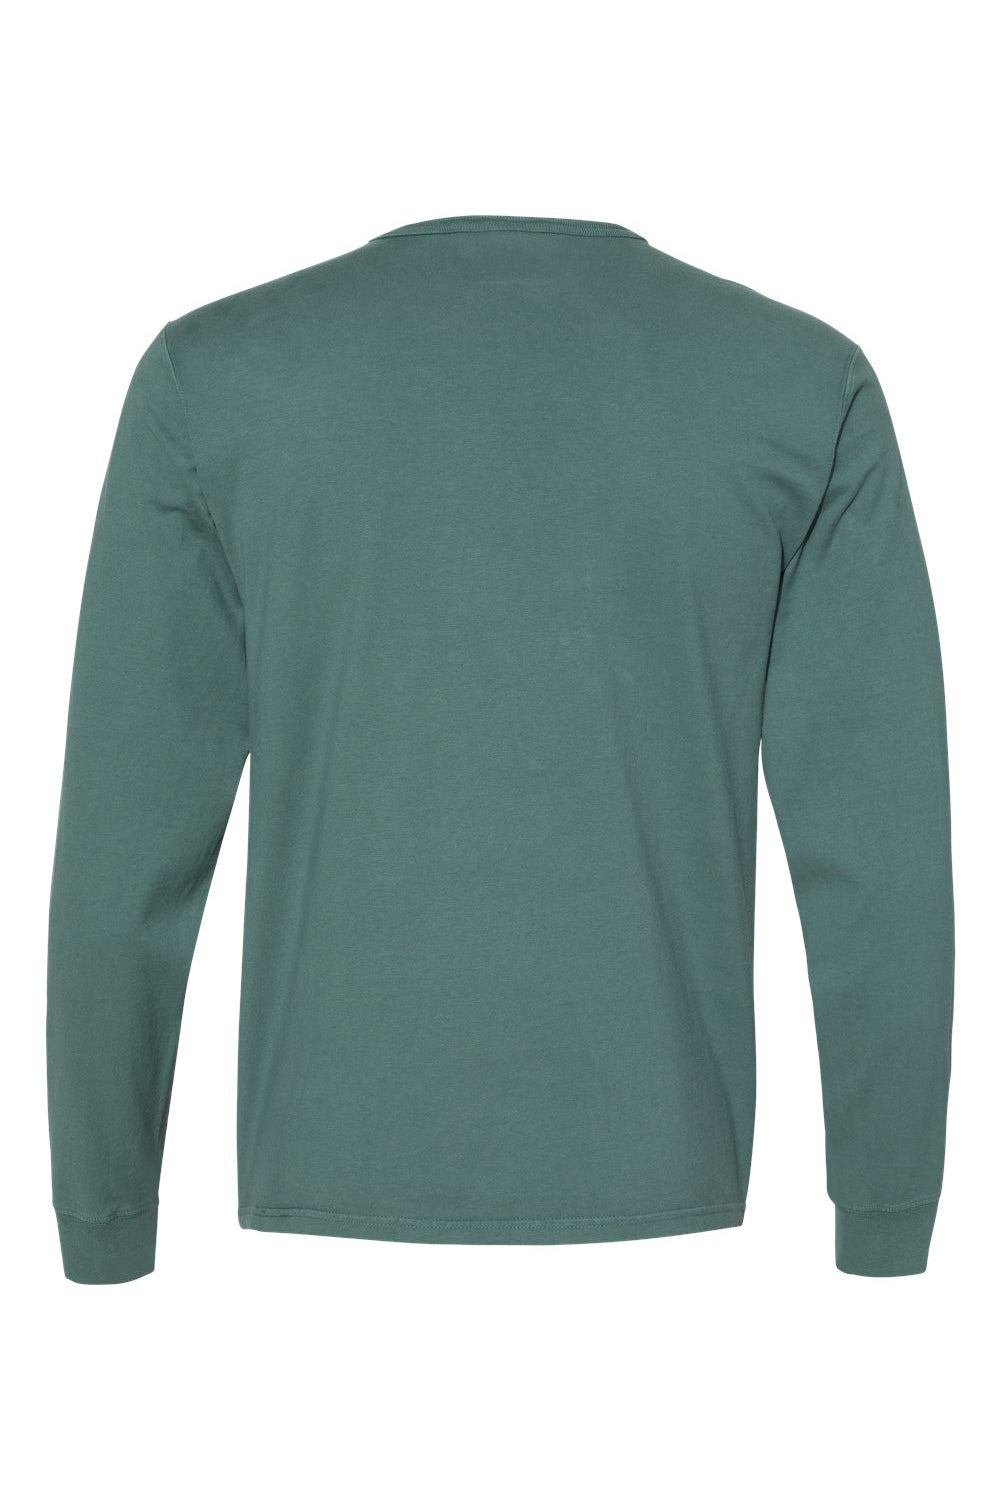 Champion CD200 Mens Garment Dyed Long Sleeve Crewneck T-Shirt Cactus Green Flat Back